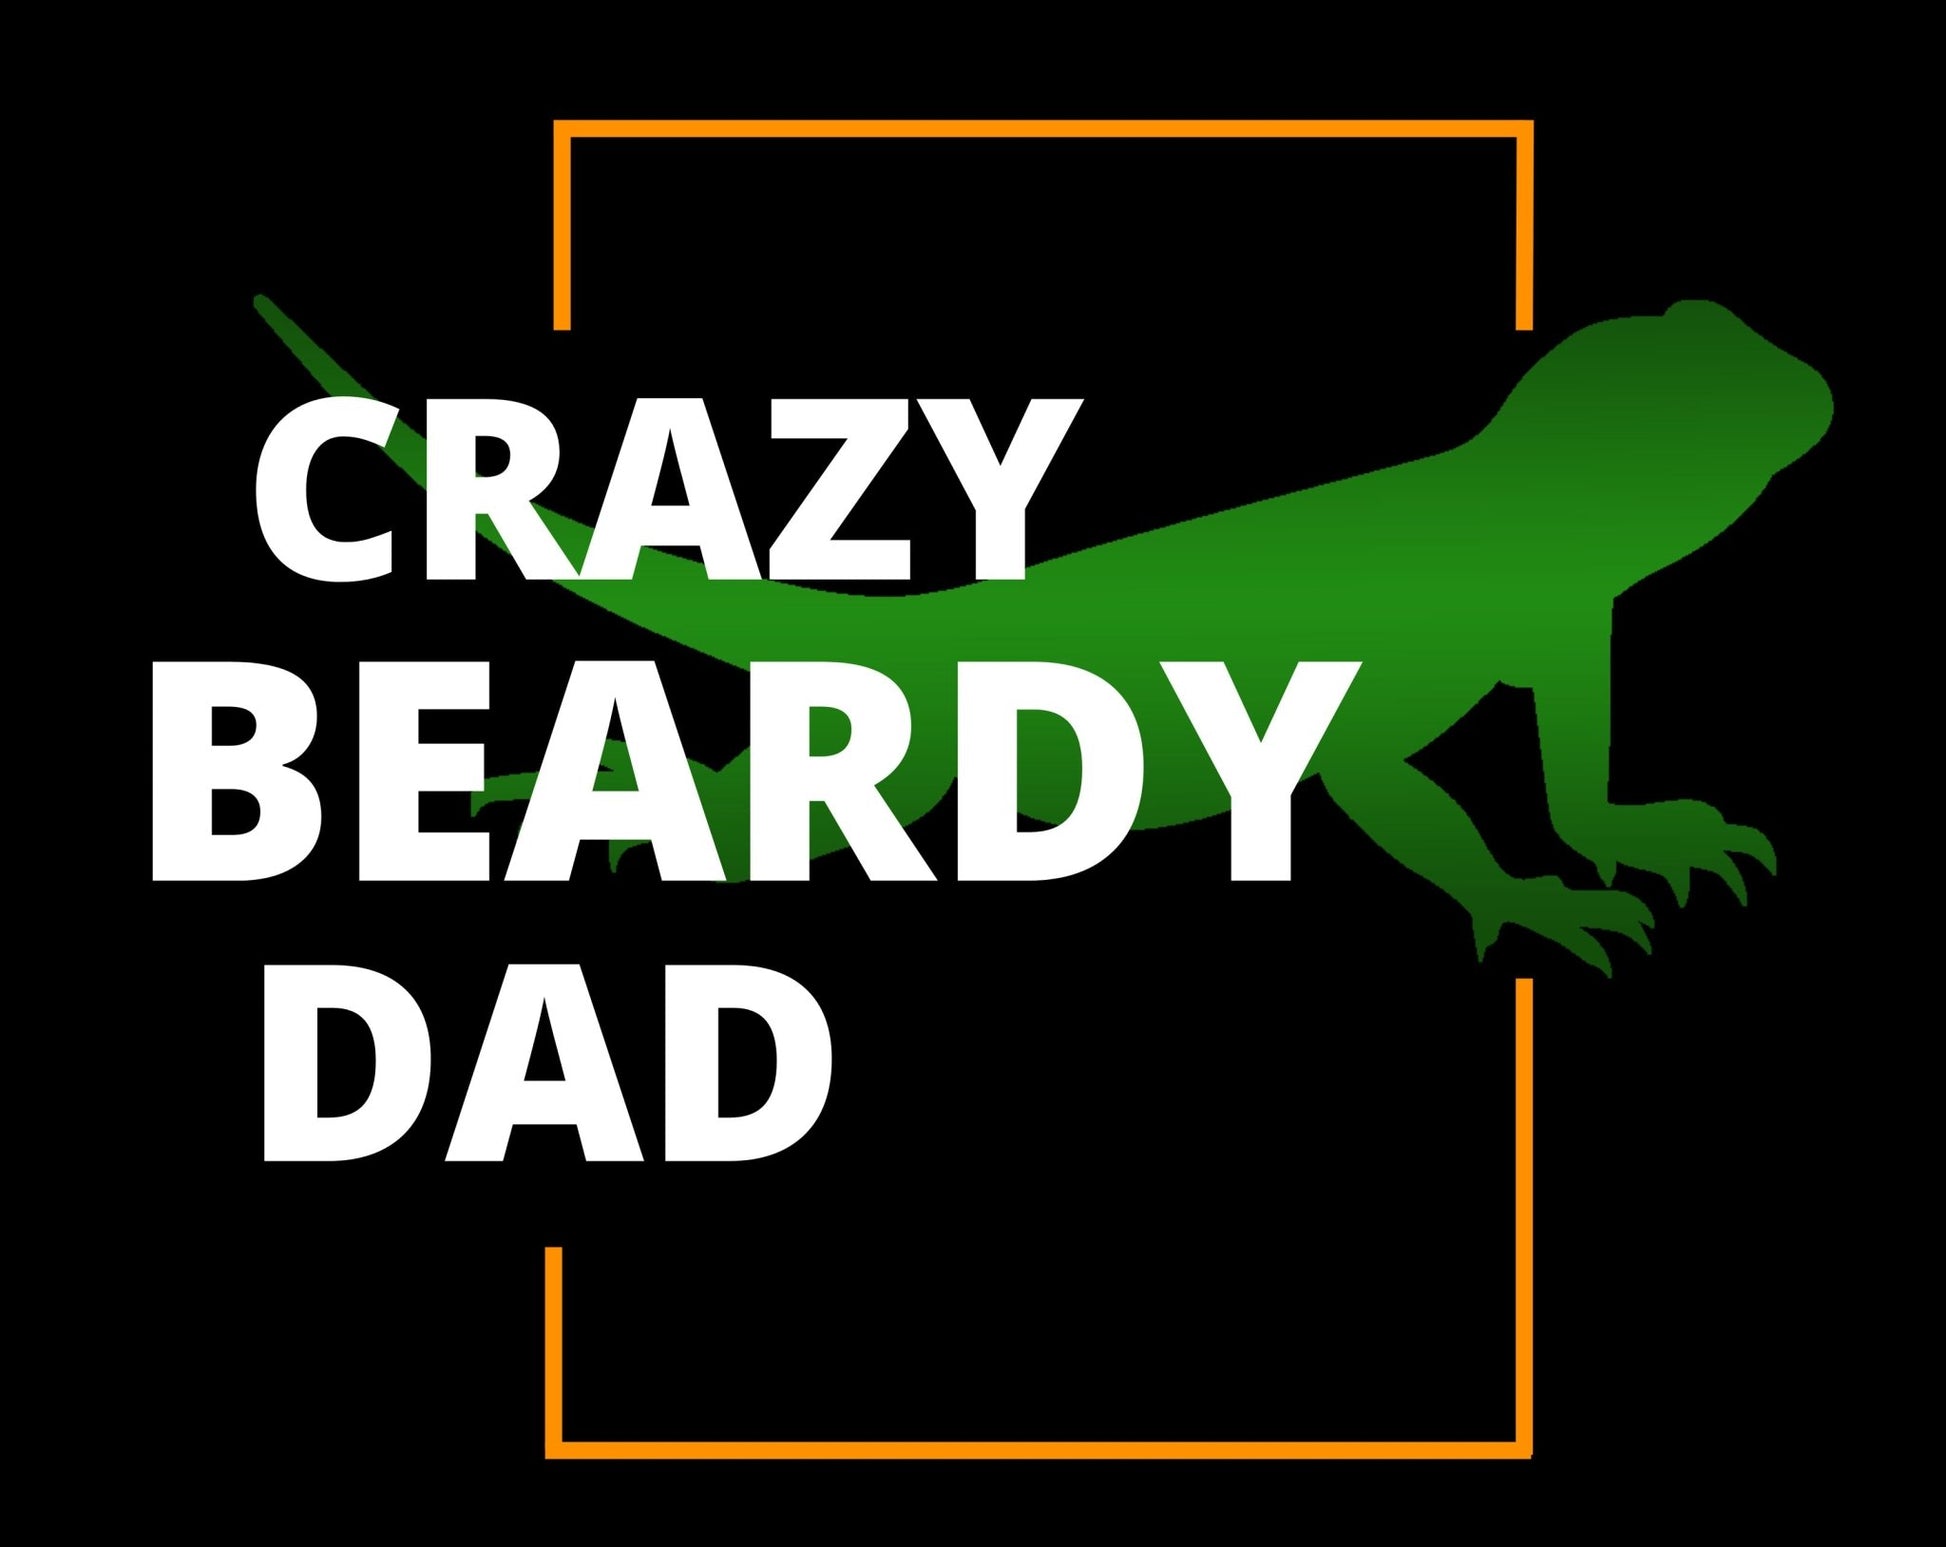 Crazy Beardy Dad Heavy Cotton T-Shirt